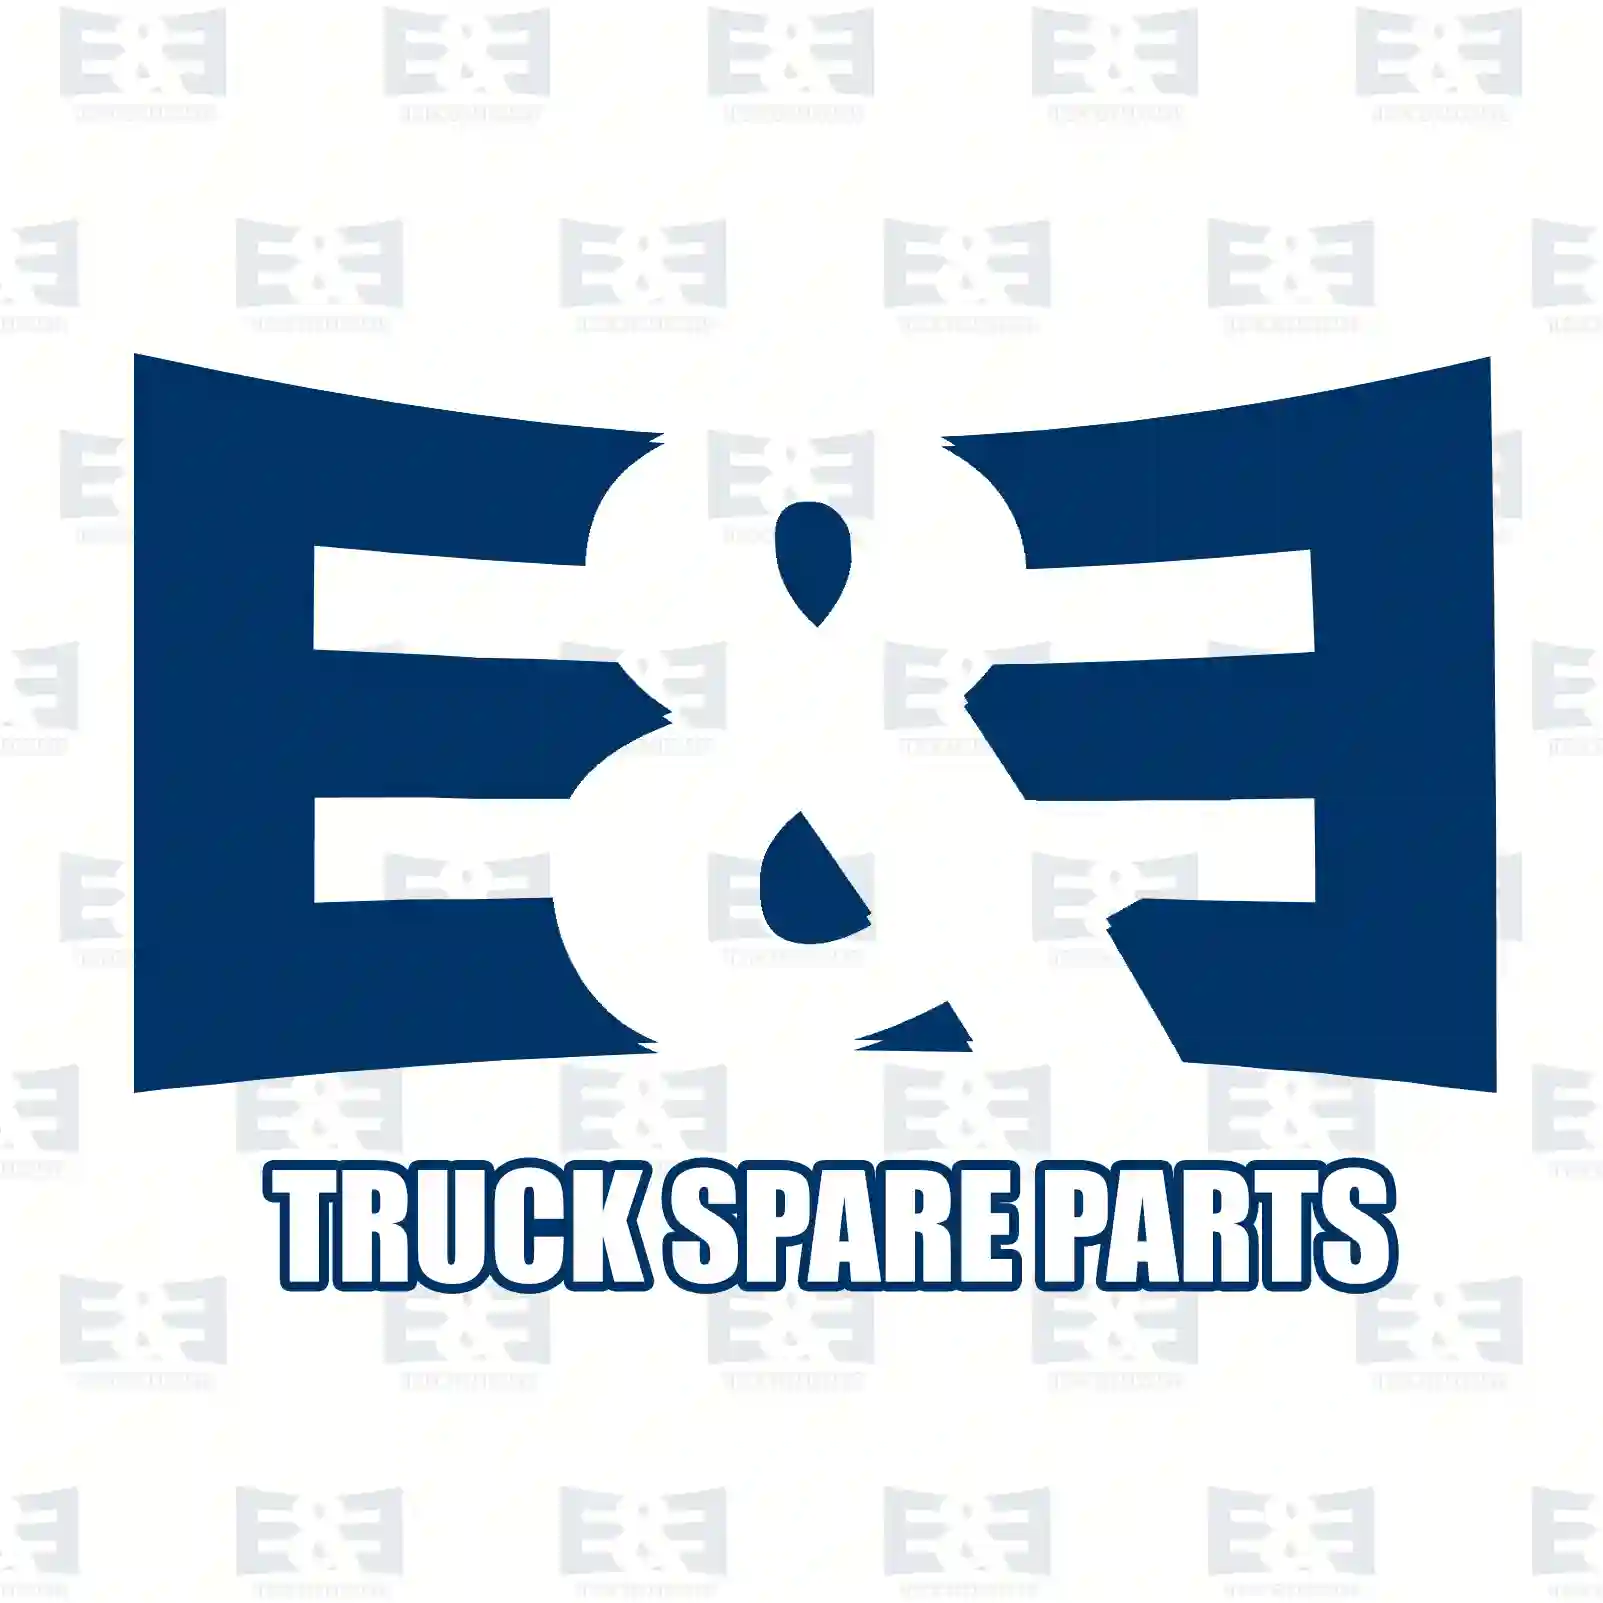  Wing nut || E&E Truck Spare Parts | Truck Spare Parts, Auotomotive Spare Parts